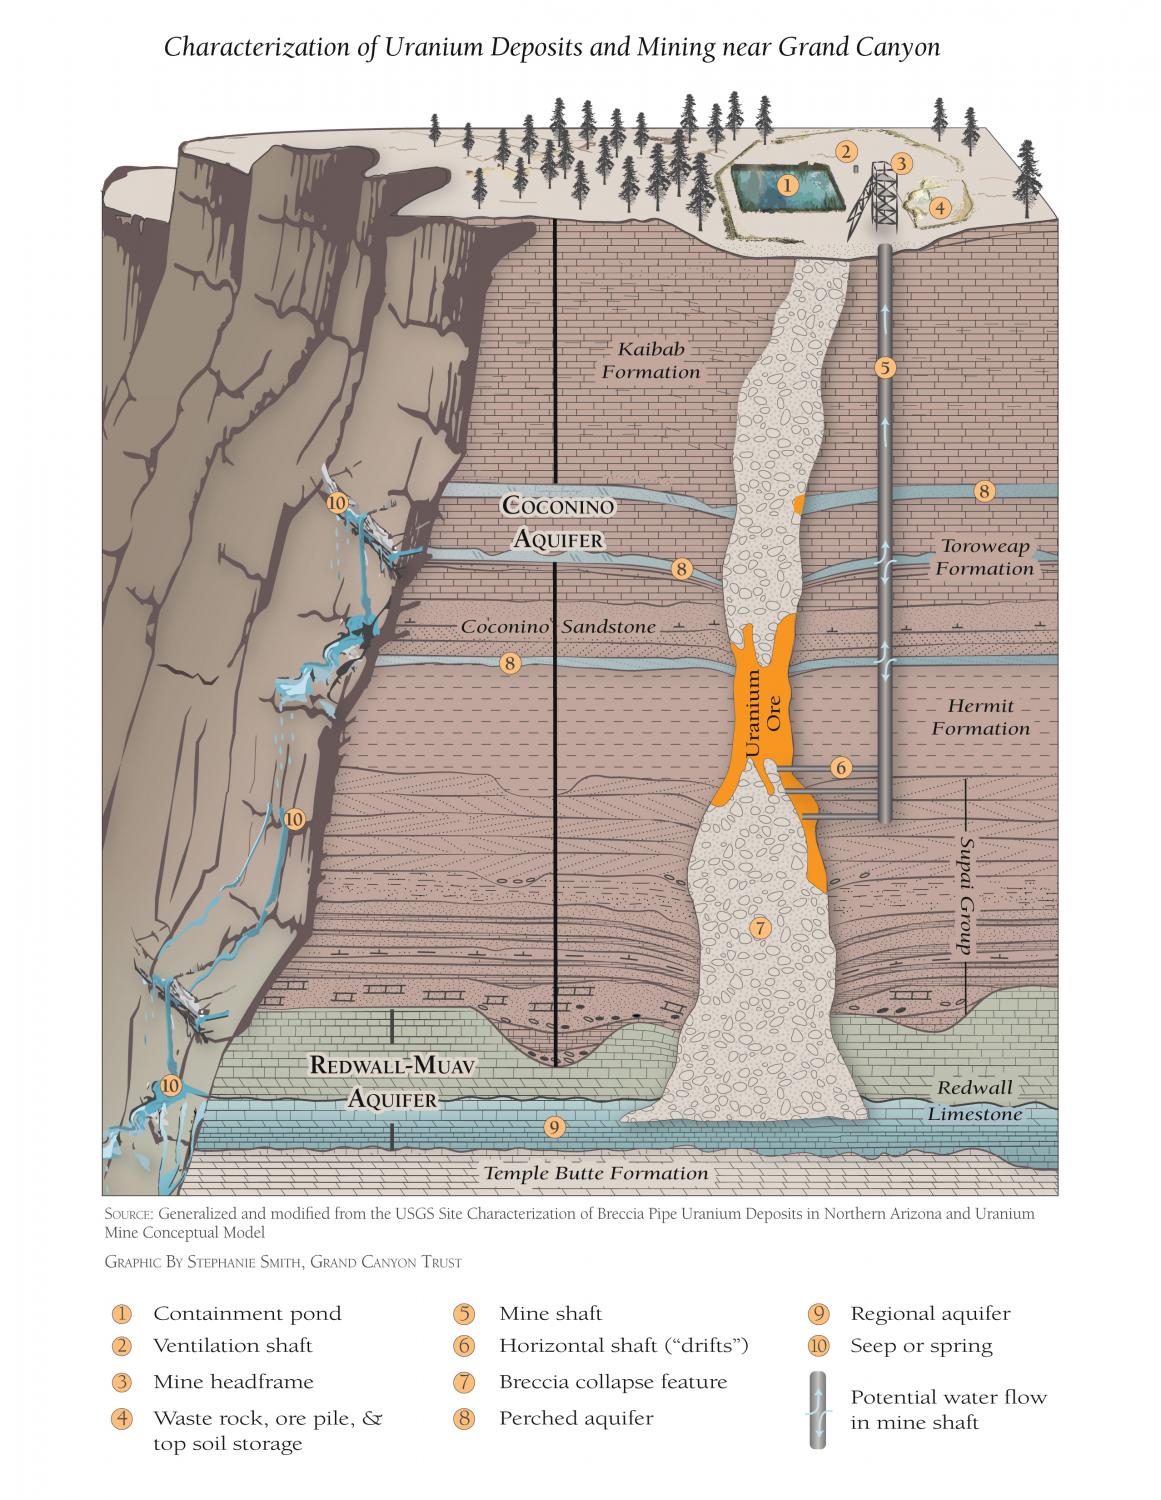 Characterization of Uranium Mining and Deposits Near Grand Canyon